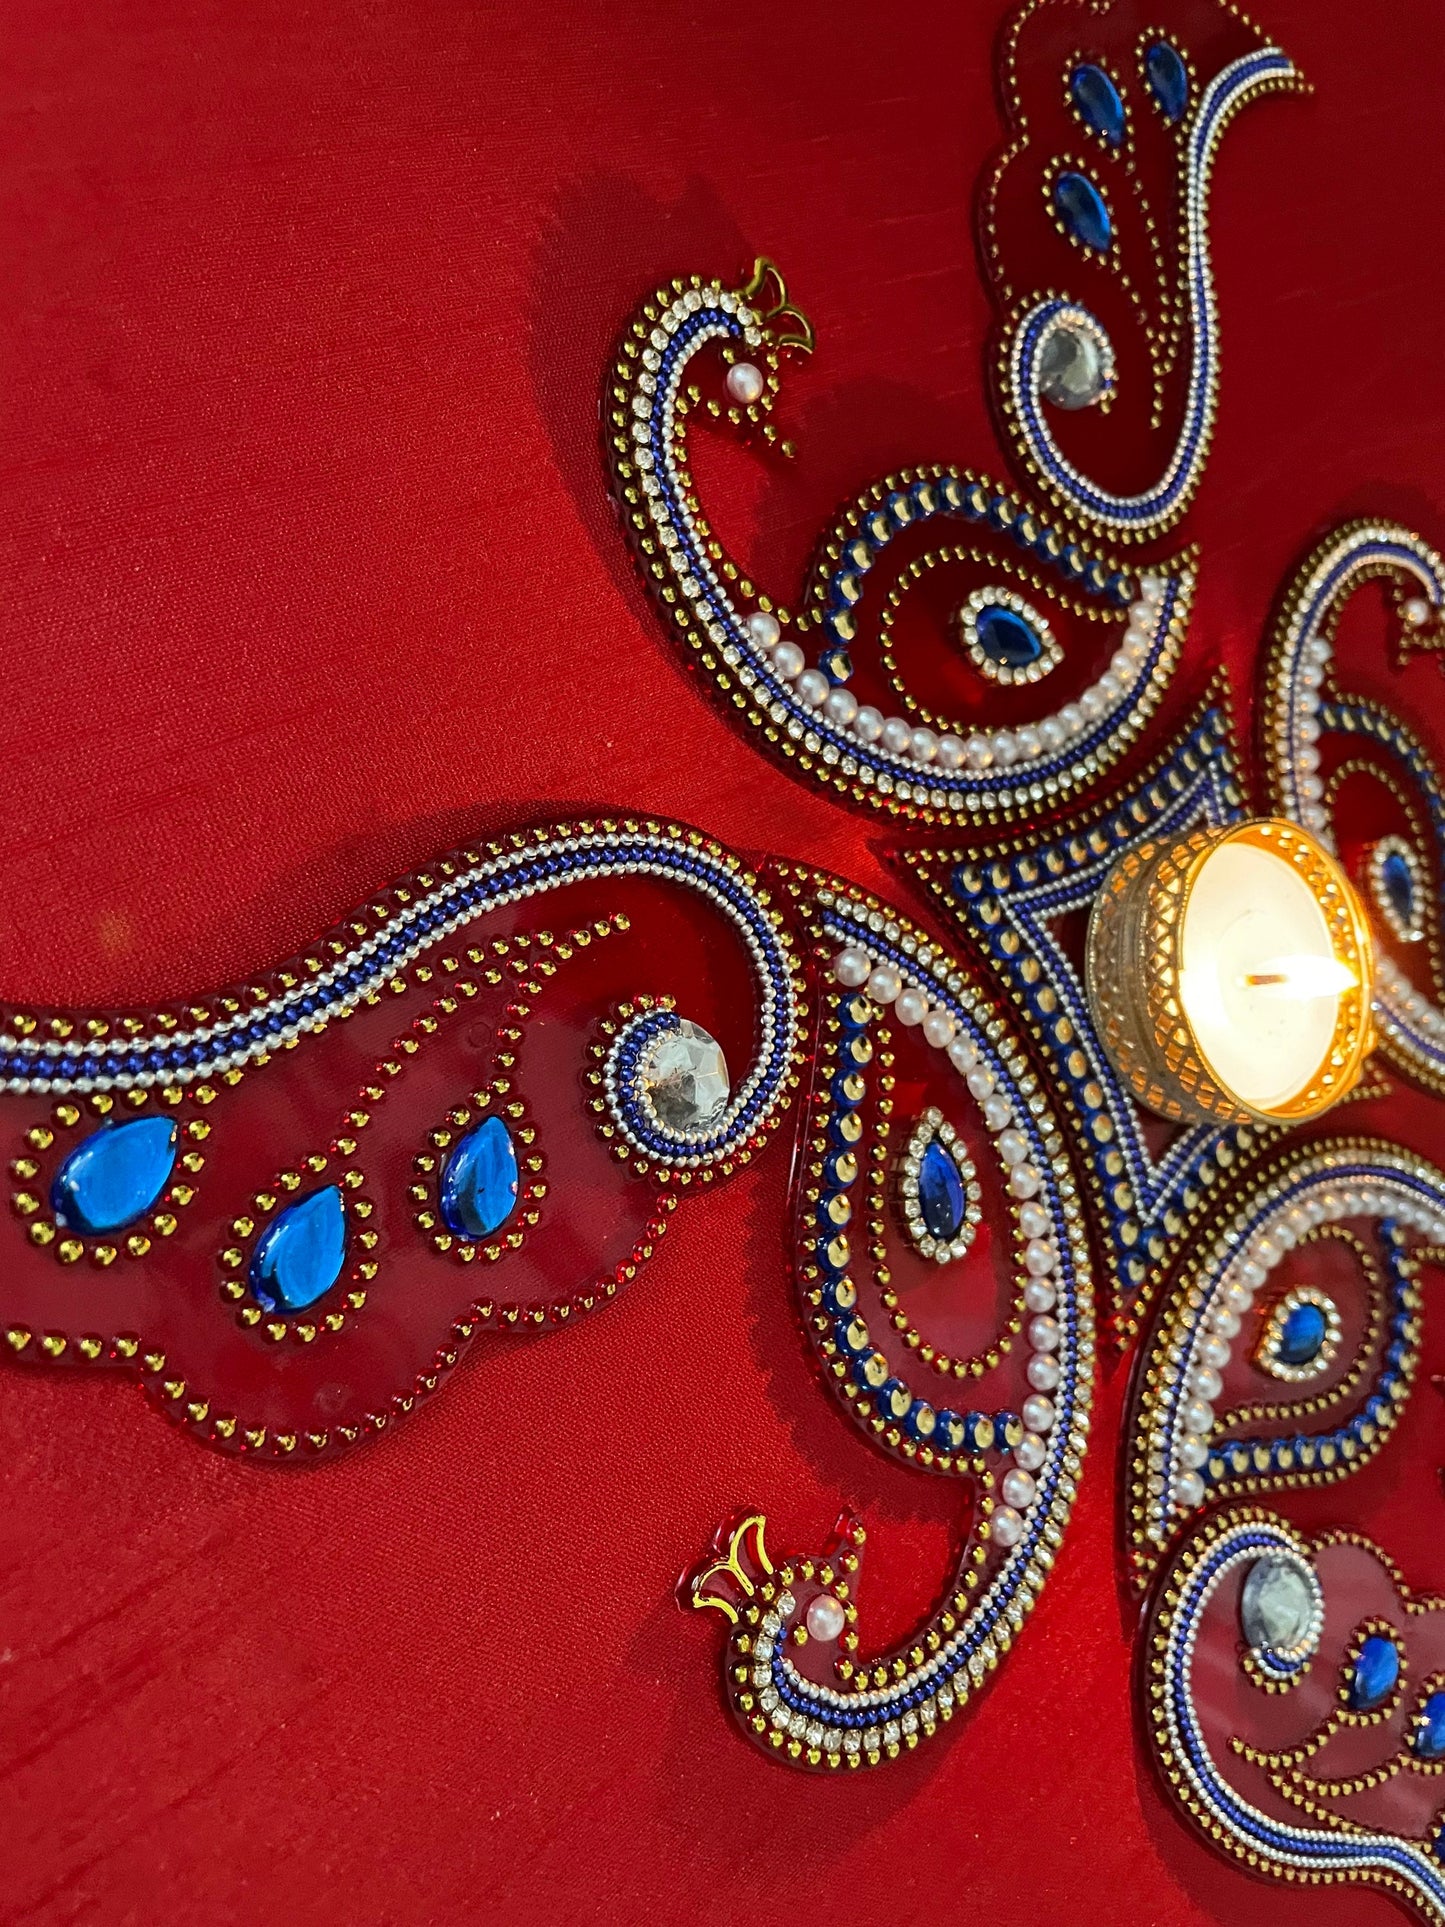 Nine Pieces Peacock Rangoli Re-Usable Floor Art Weddings New Home Navratri Durga Pooja Mor Design with Diva Vati